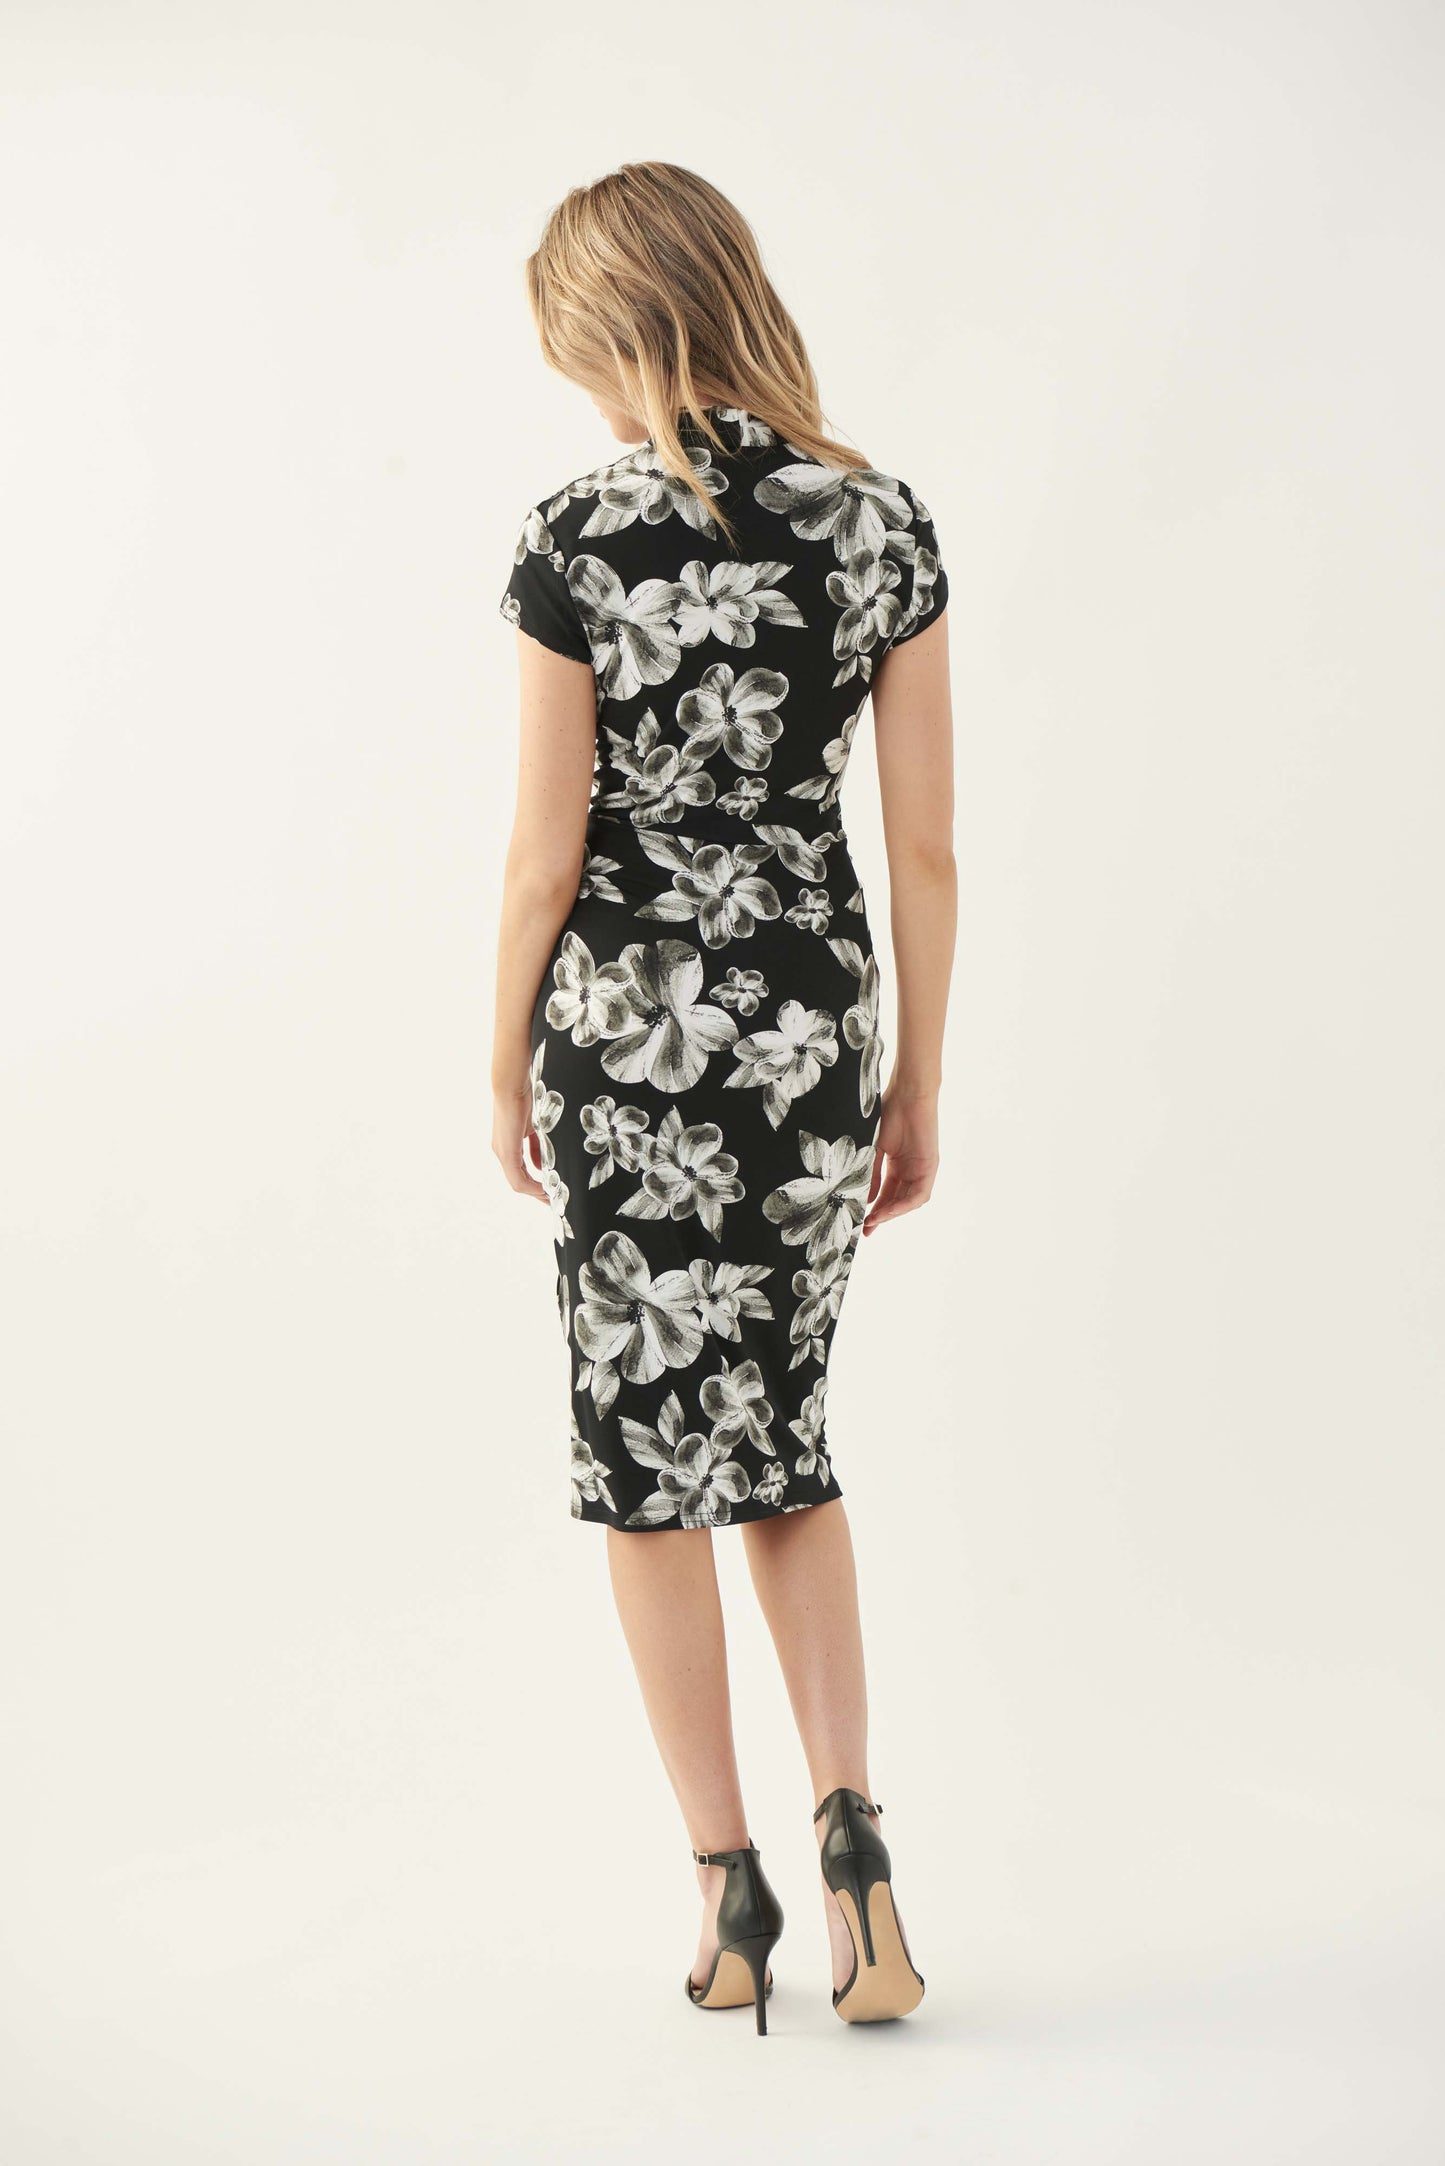 Joseph Ribkoff - Dress - Style 221028 - 50% Off - 1 x 10 left